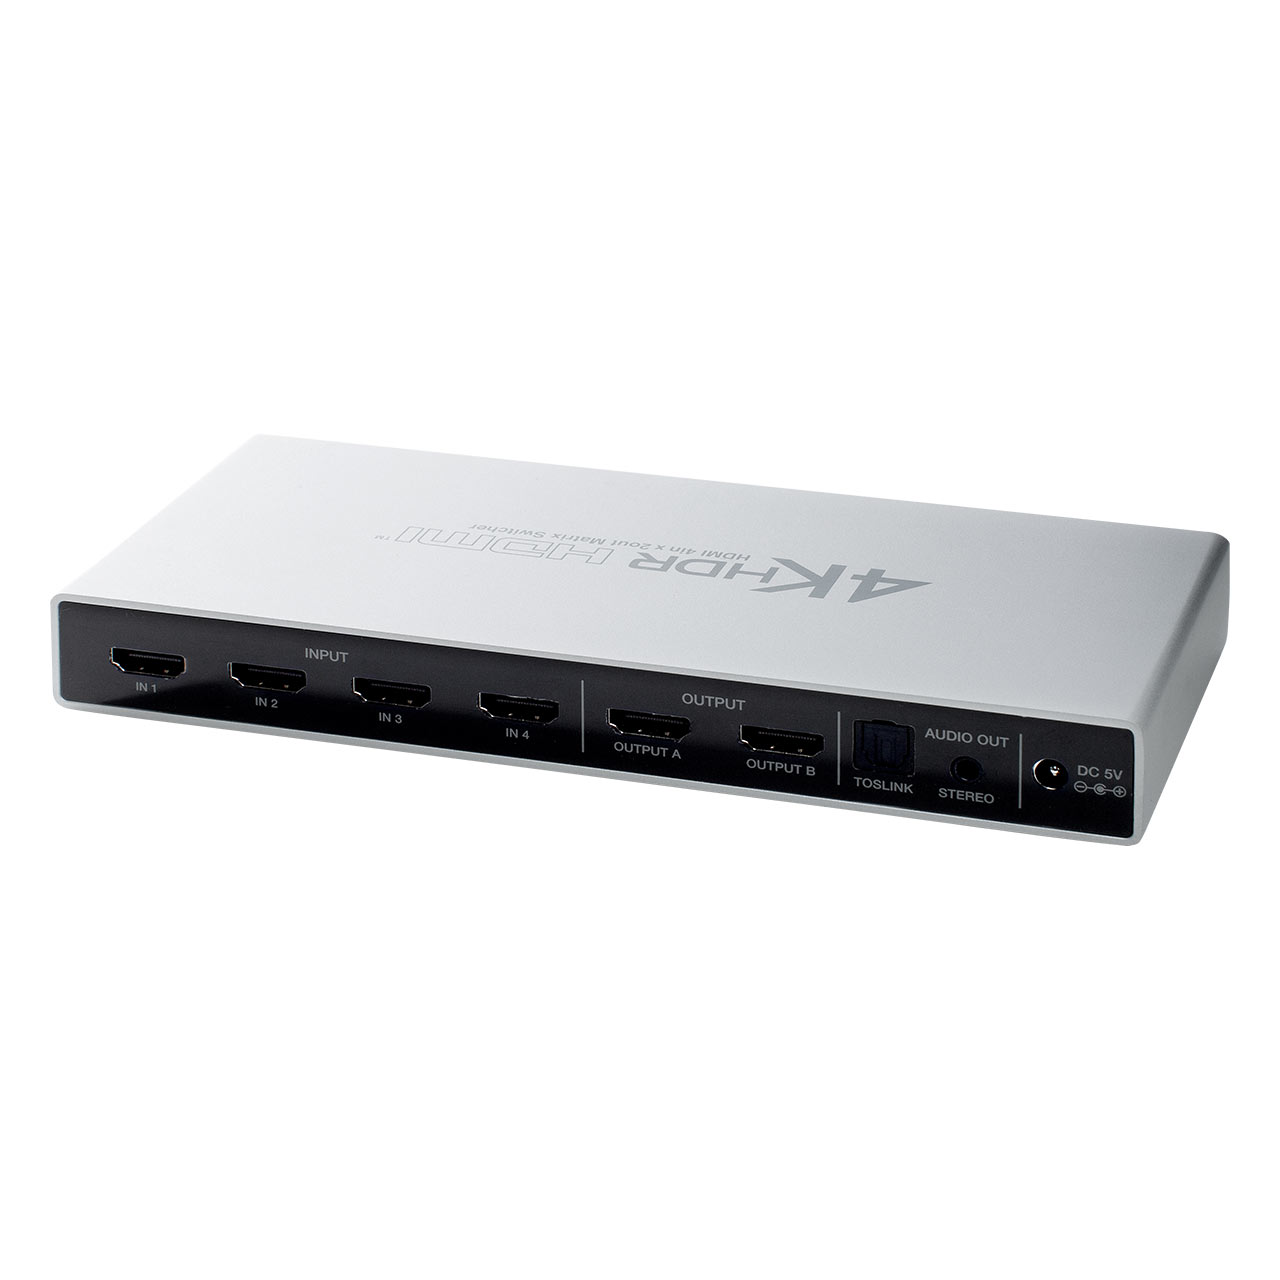 HDMIマトリックス切替器 4入力2出力 4K/60Hz HDR HDCP2.2 光デジタル リモコン付き PS5対応 400-SW039